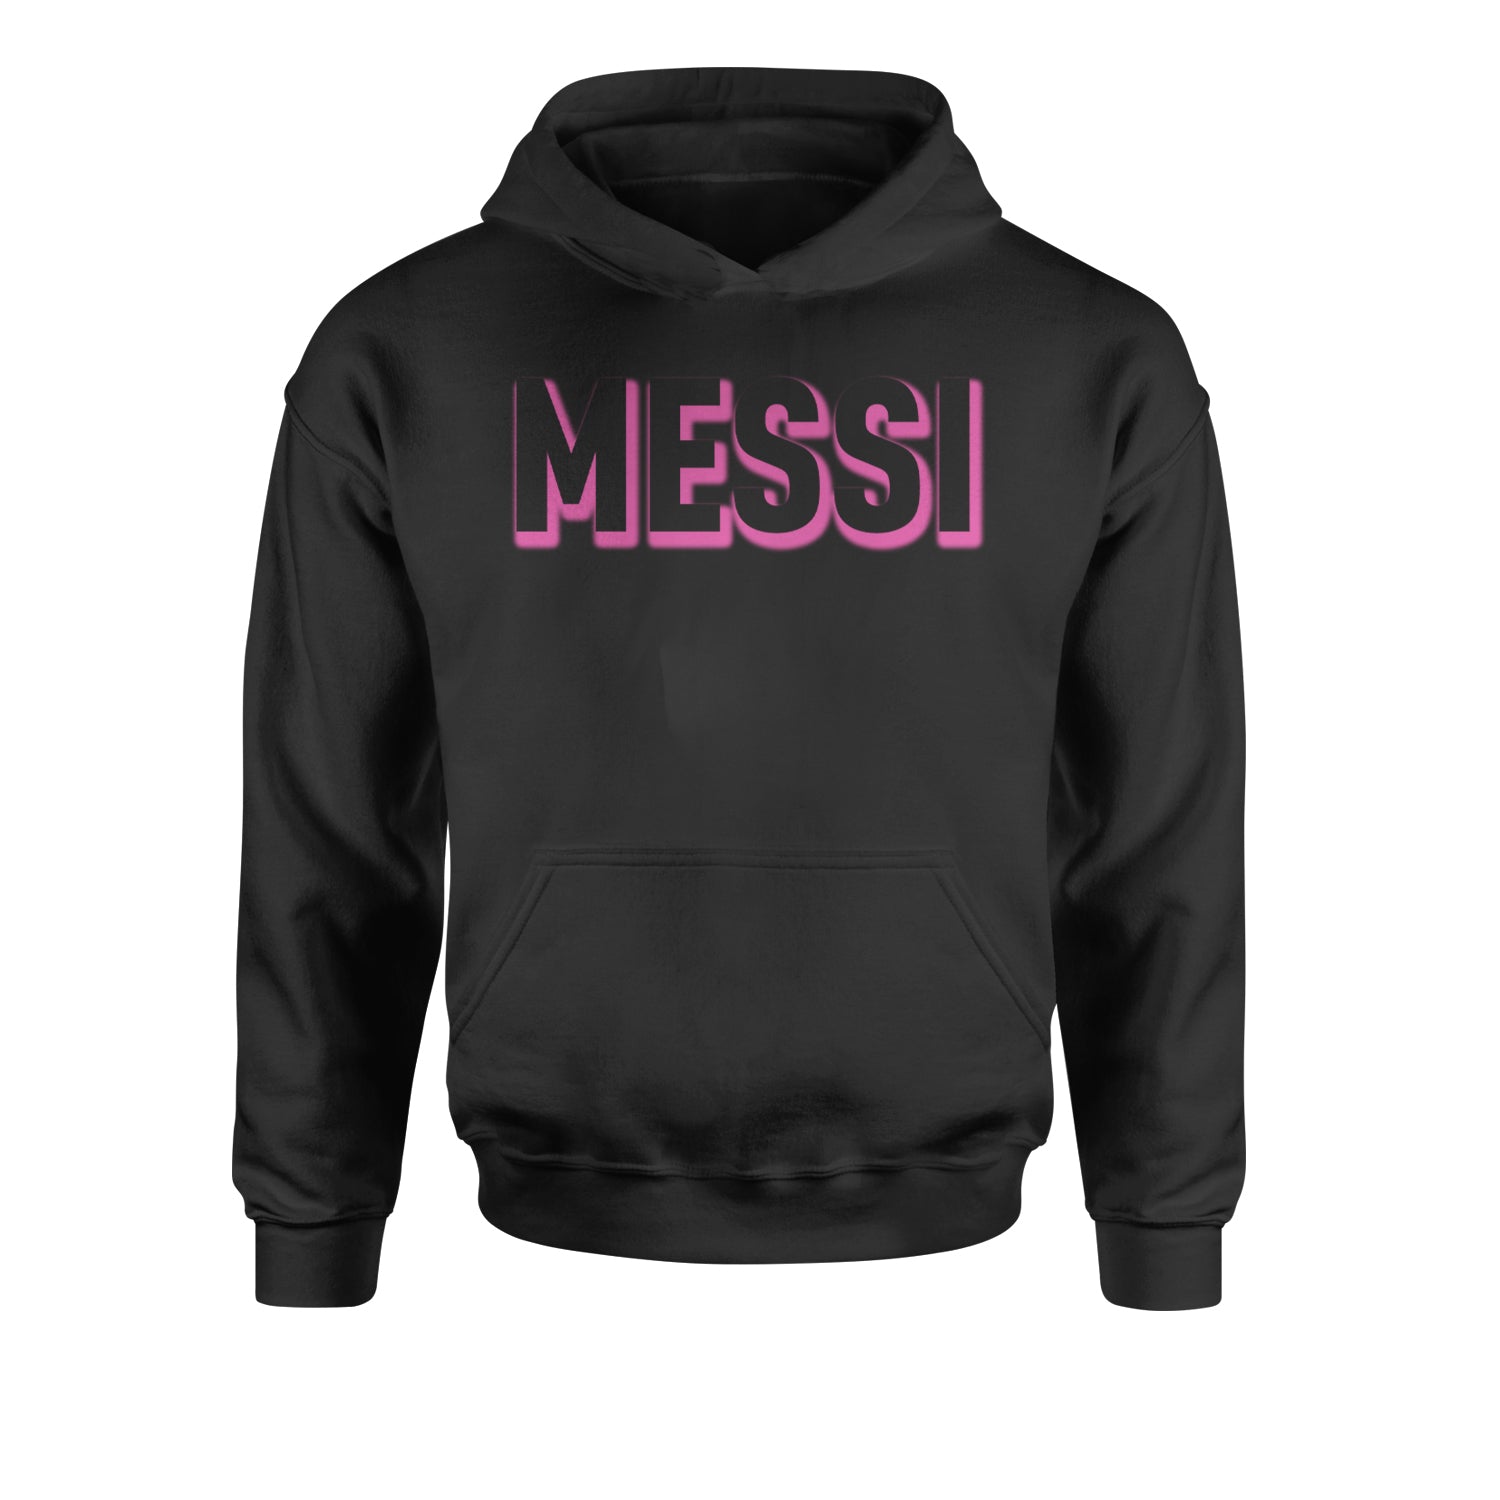 Messi OUTLINE Miami Futbol Youth-Sized Hoodie